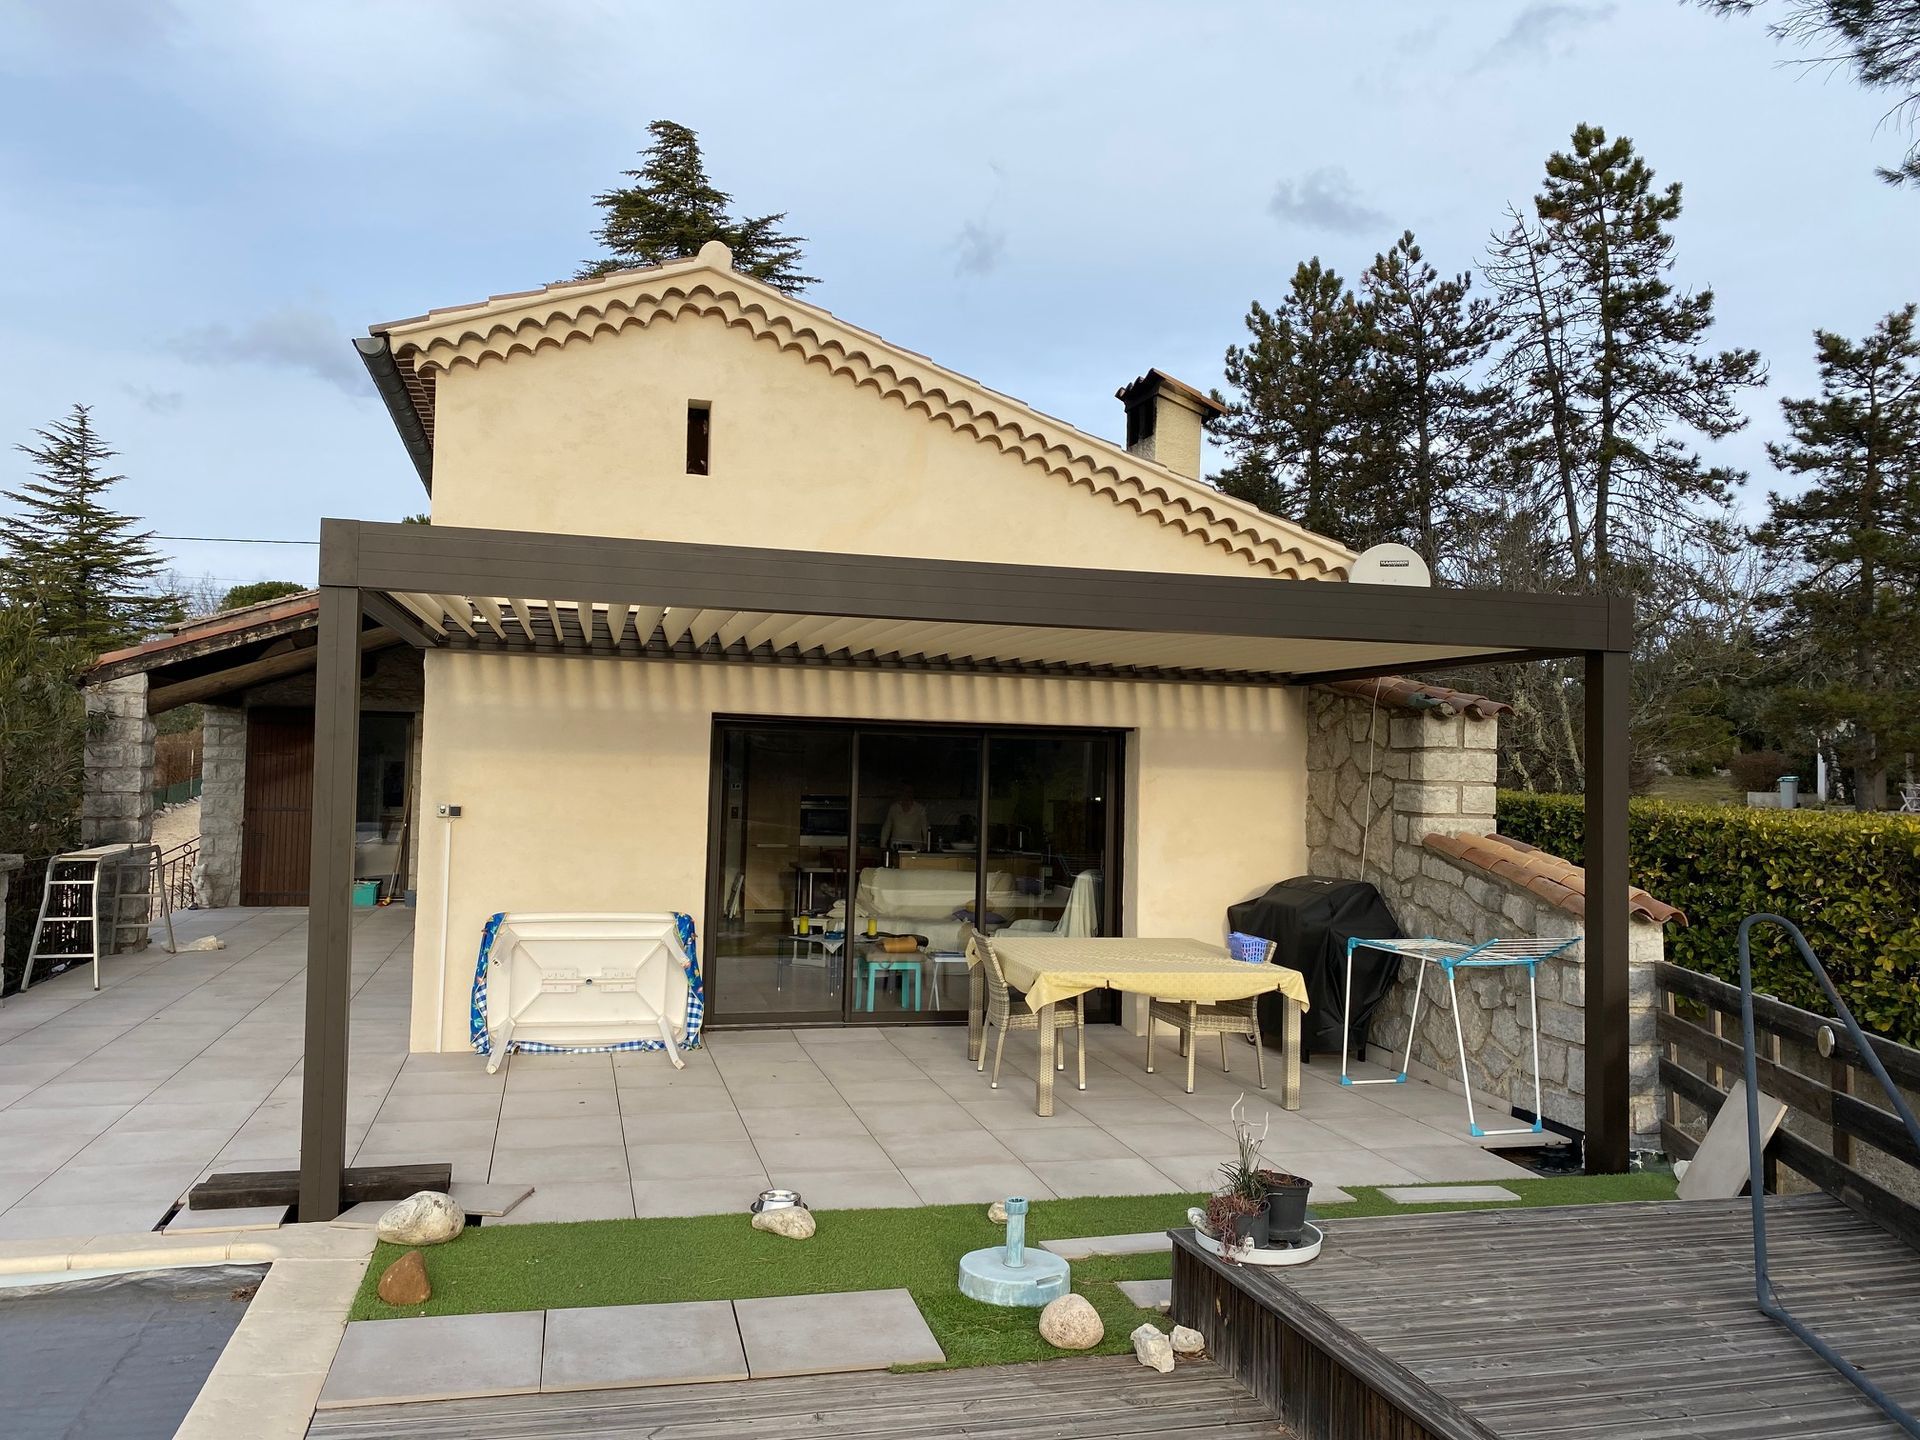 Maison beige avec terrasse en pierre et pergola